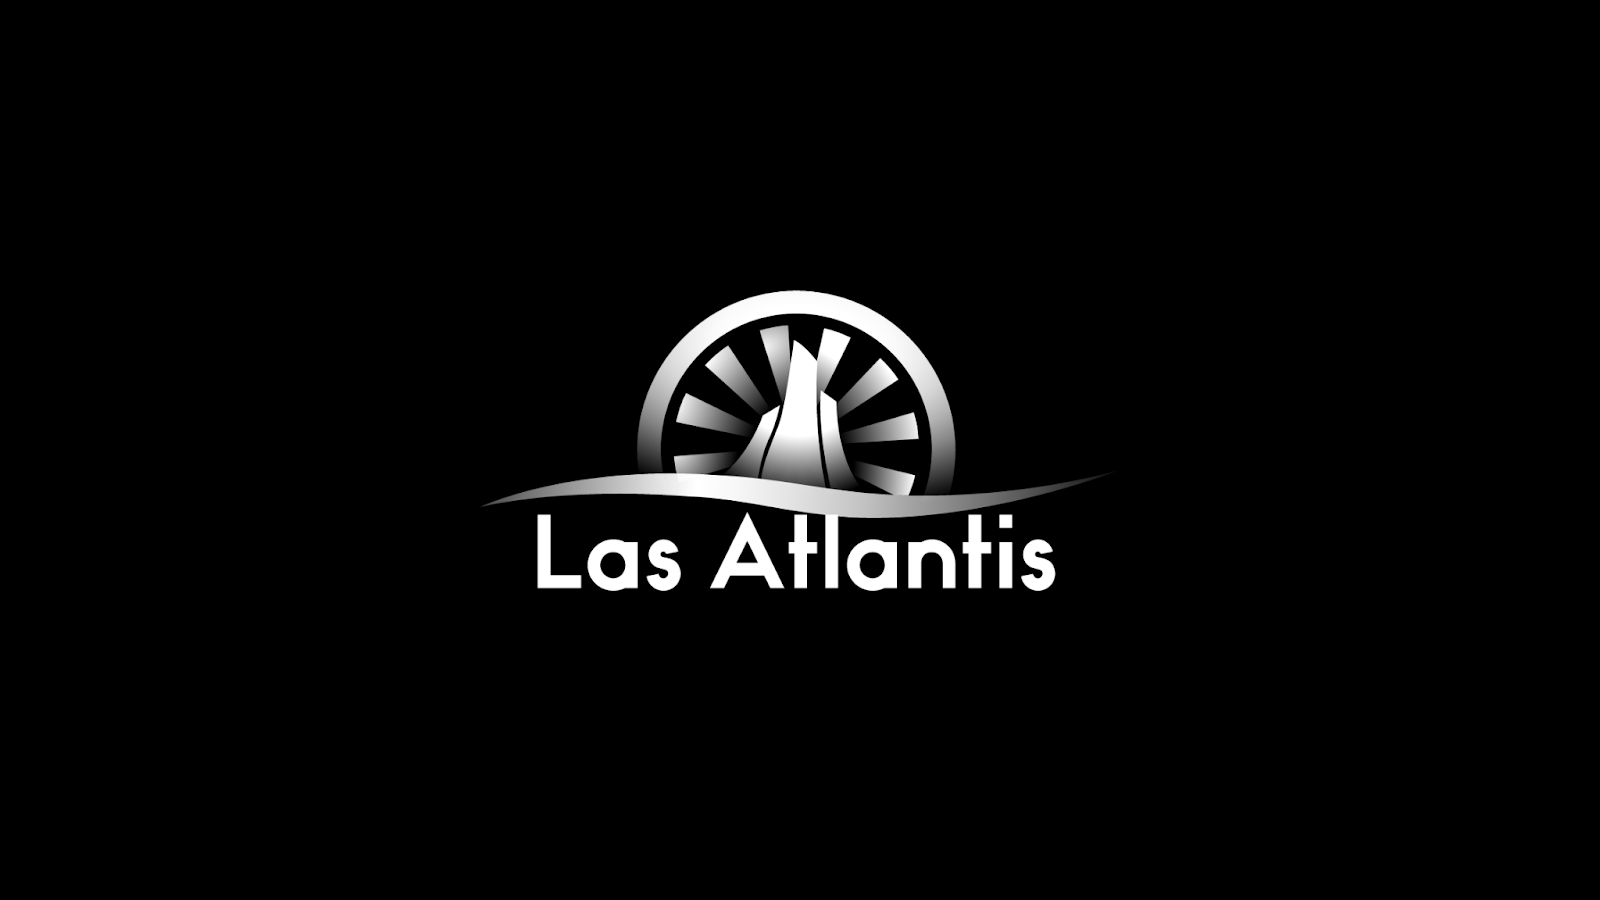 Las Atlantis Review